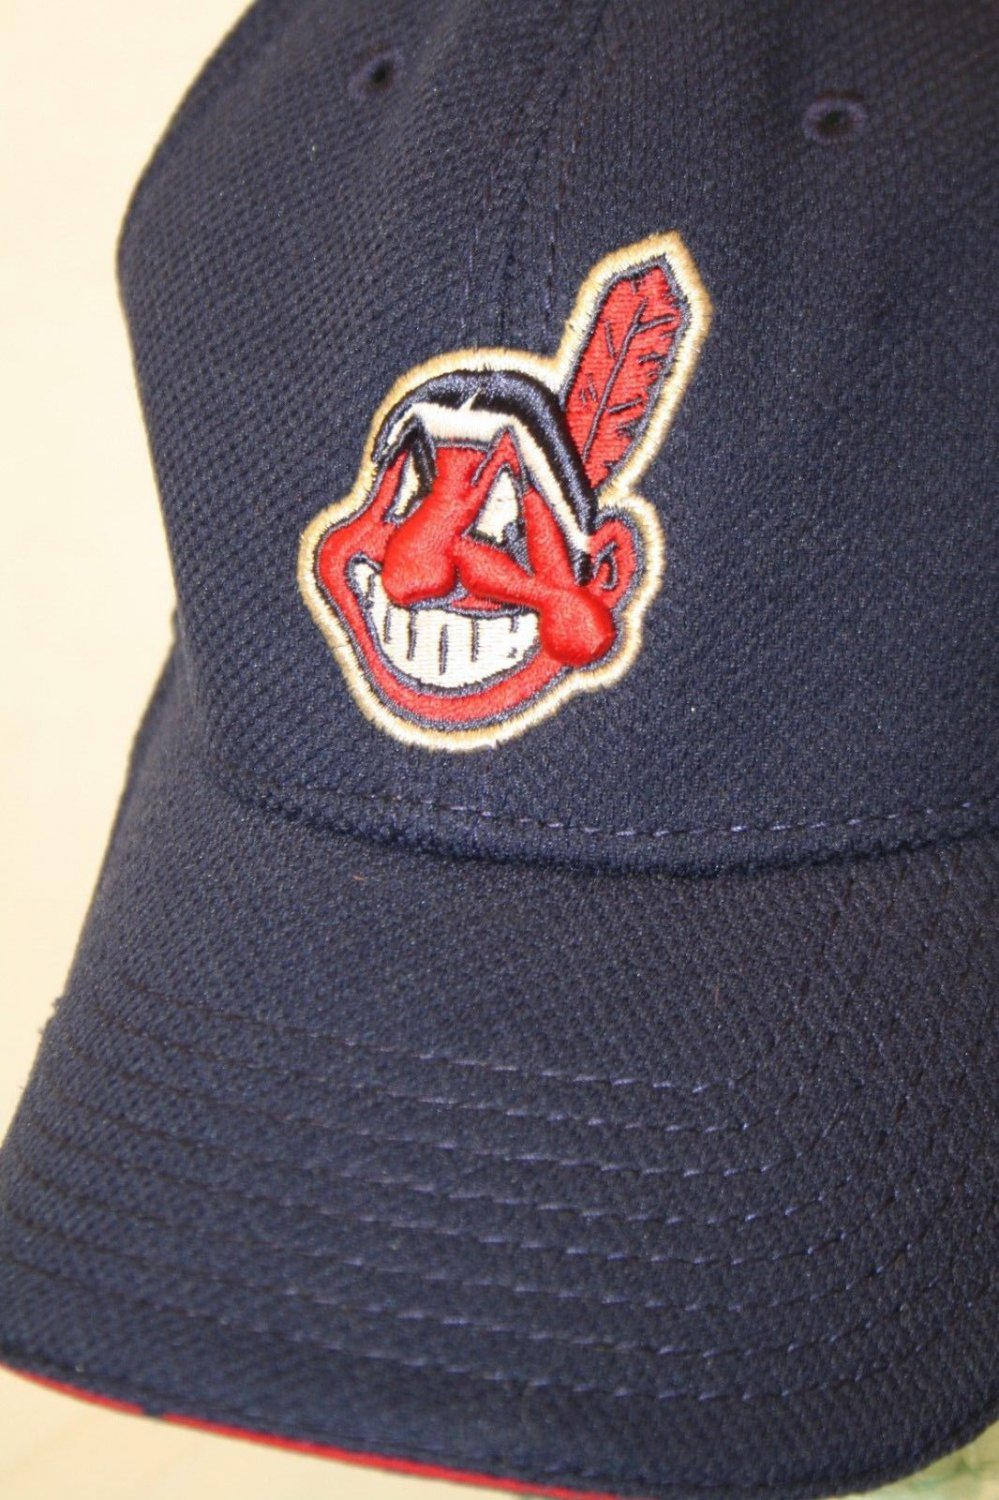 Cleveland Indians Chief Wahoo New Era Navy Blue Lg-XL Batting Practice Cap  Hat